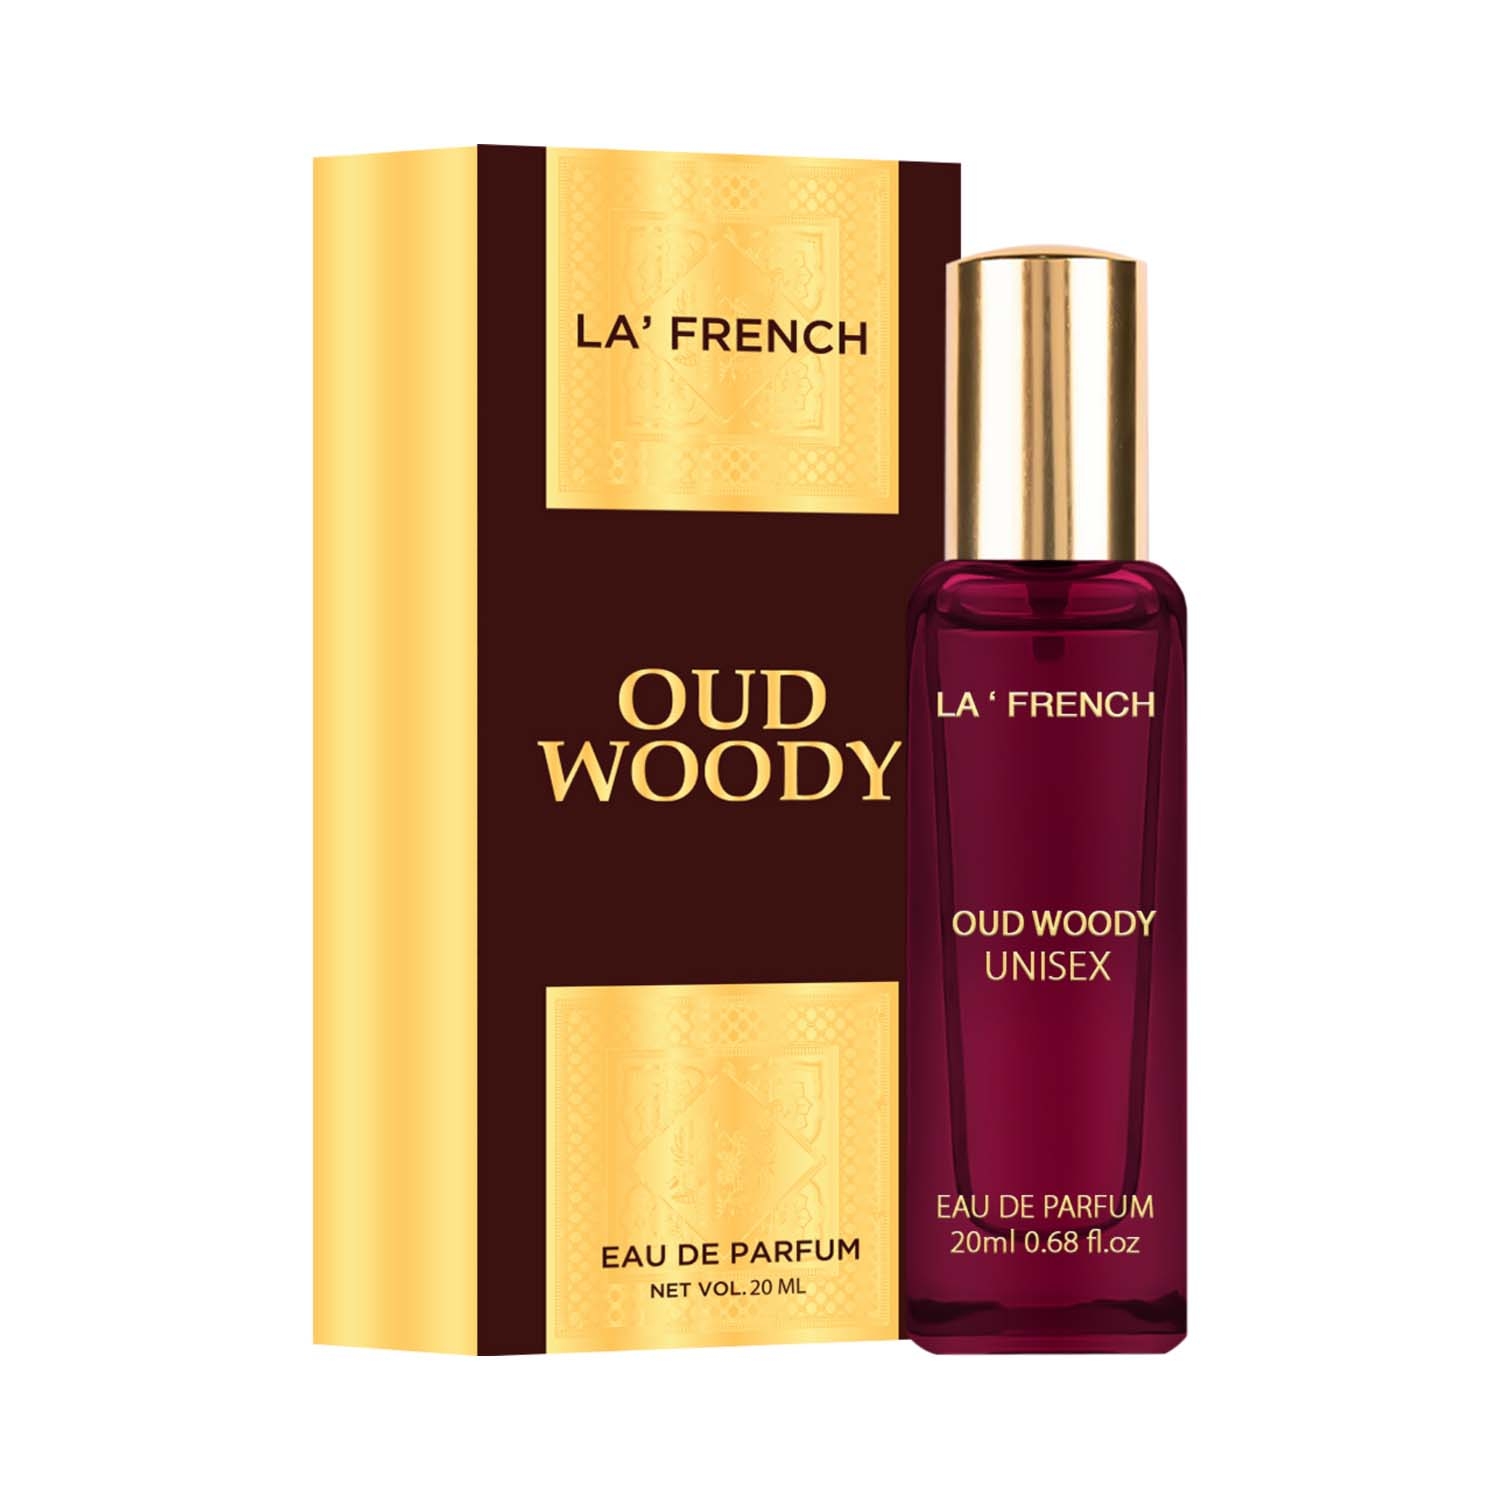 LA' French | LA' French Oud Woody Eau De Parfum (20ml)